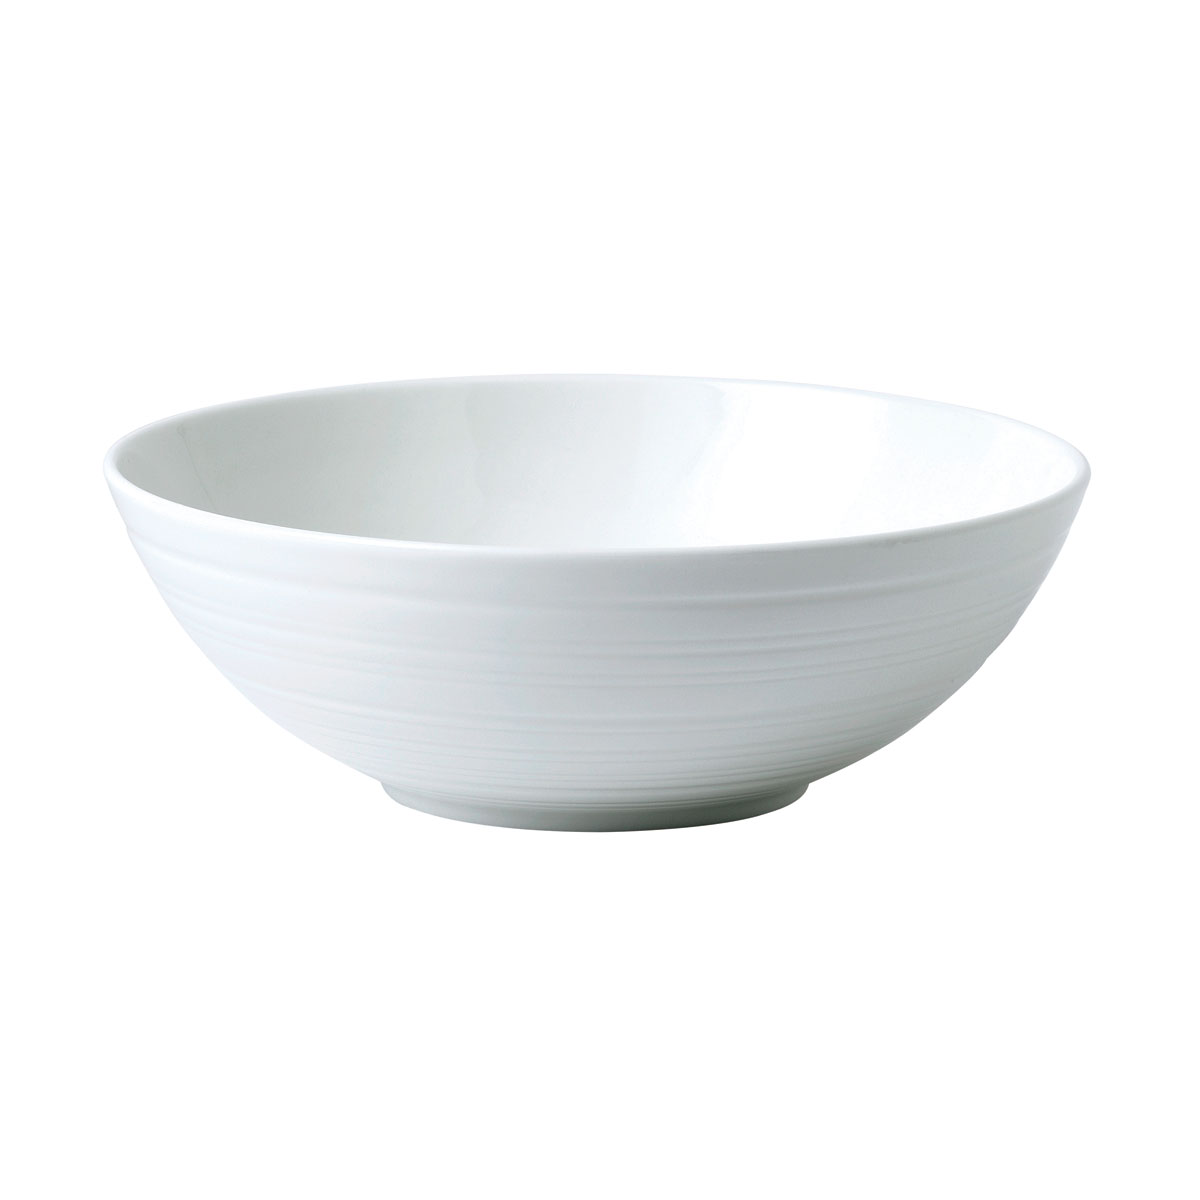 Wedgwood Jasper Conran White Strata Cereal Bowl 6.7"